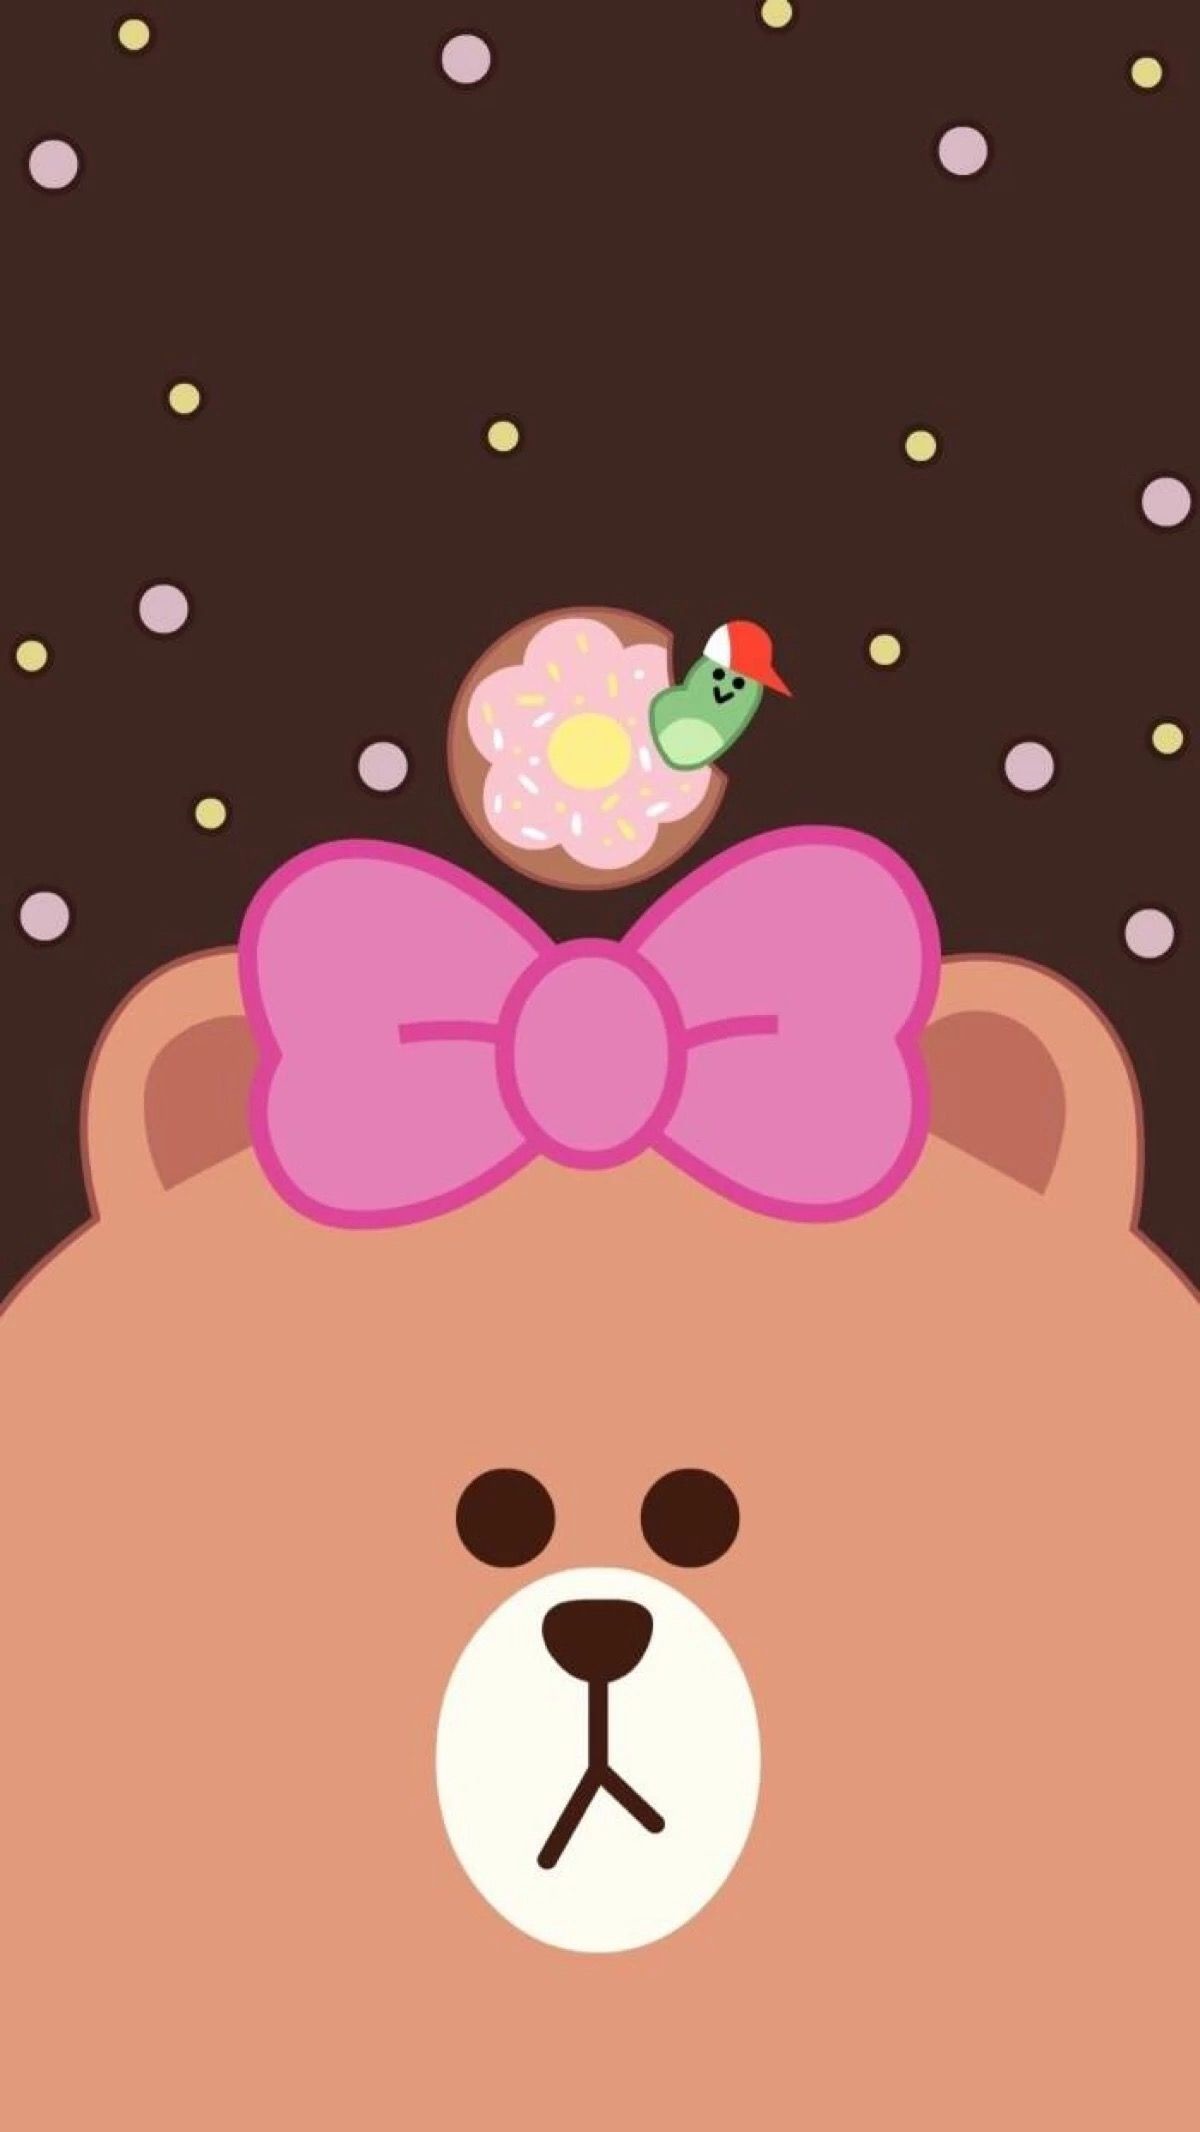 friends wallpaper iphone,cartoon,pink,illustration,teddy bear,animation